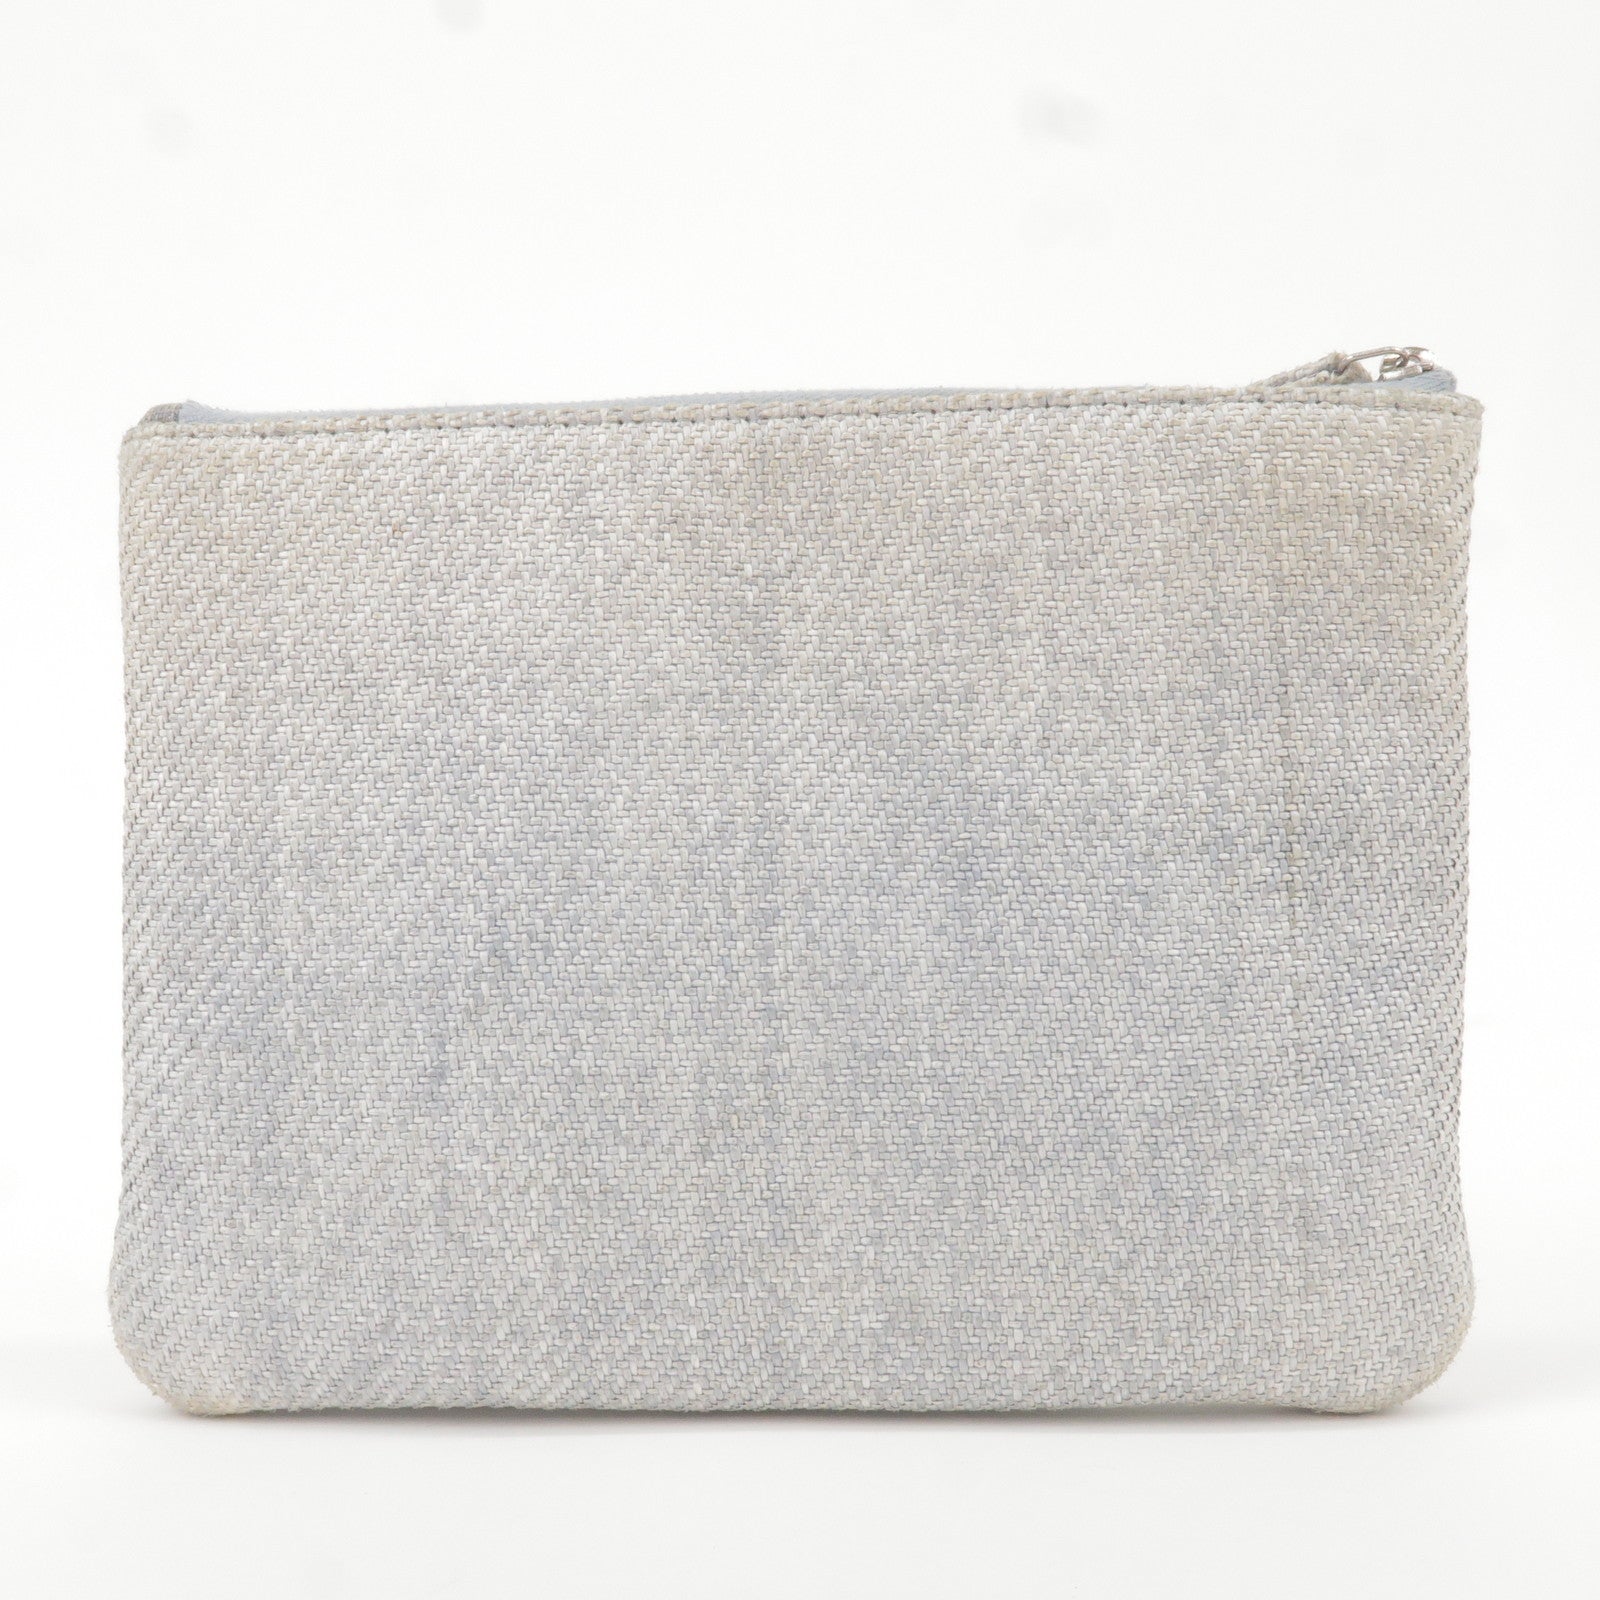 CHANEL PRECISION Shoulder Bag Pile fabric Gray White Coco Logos 90208867